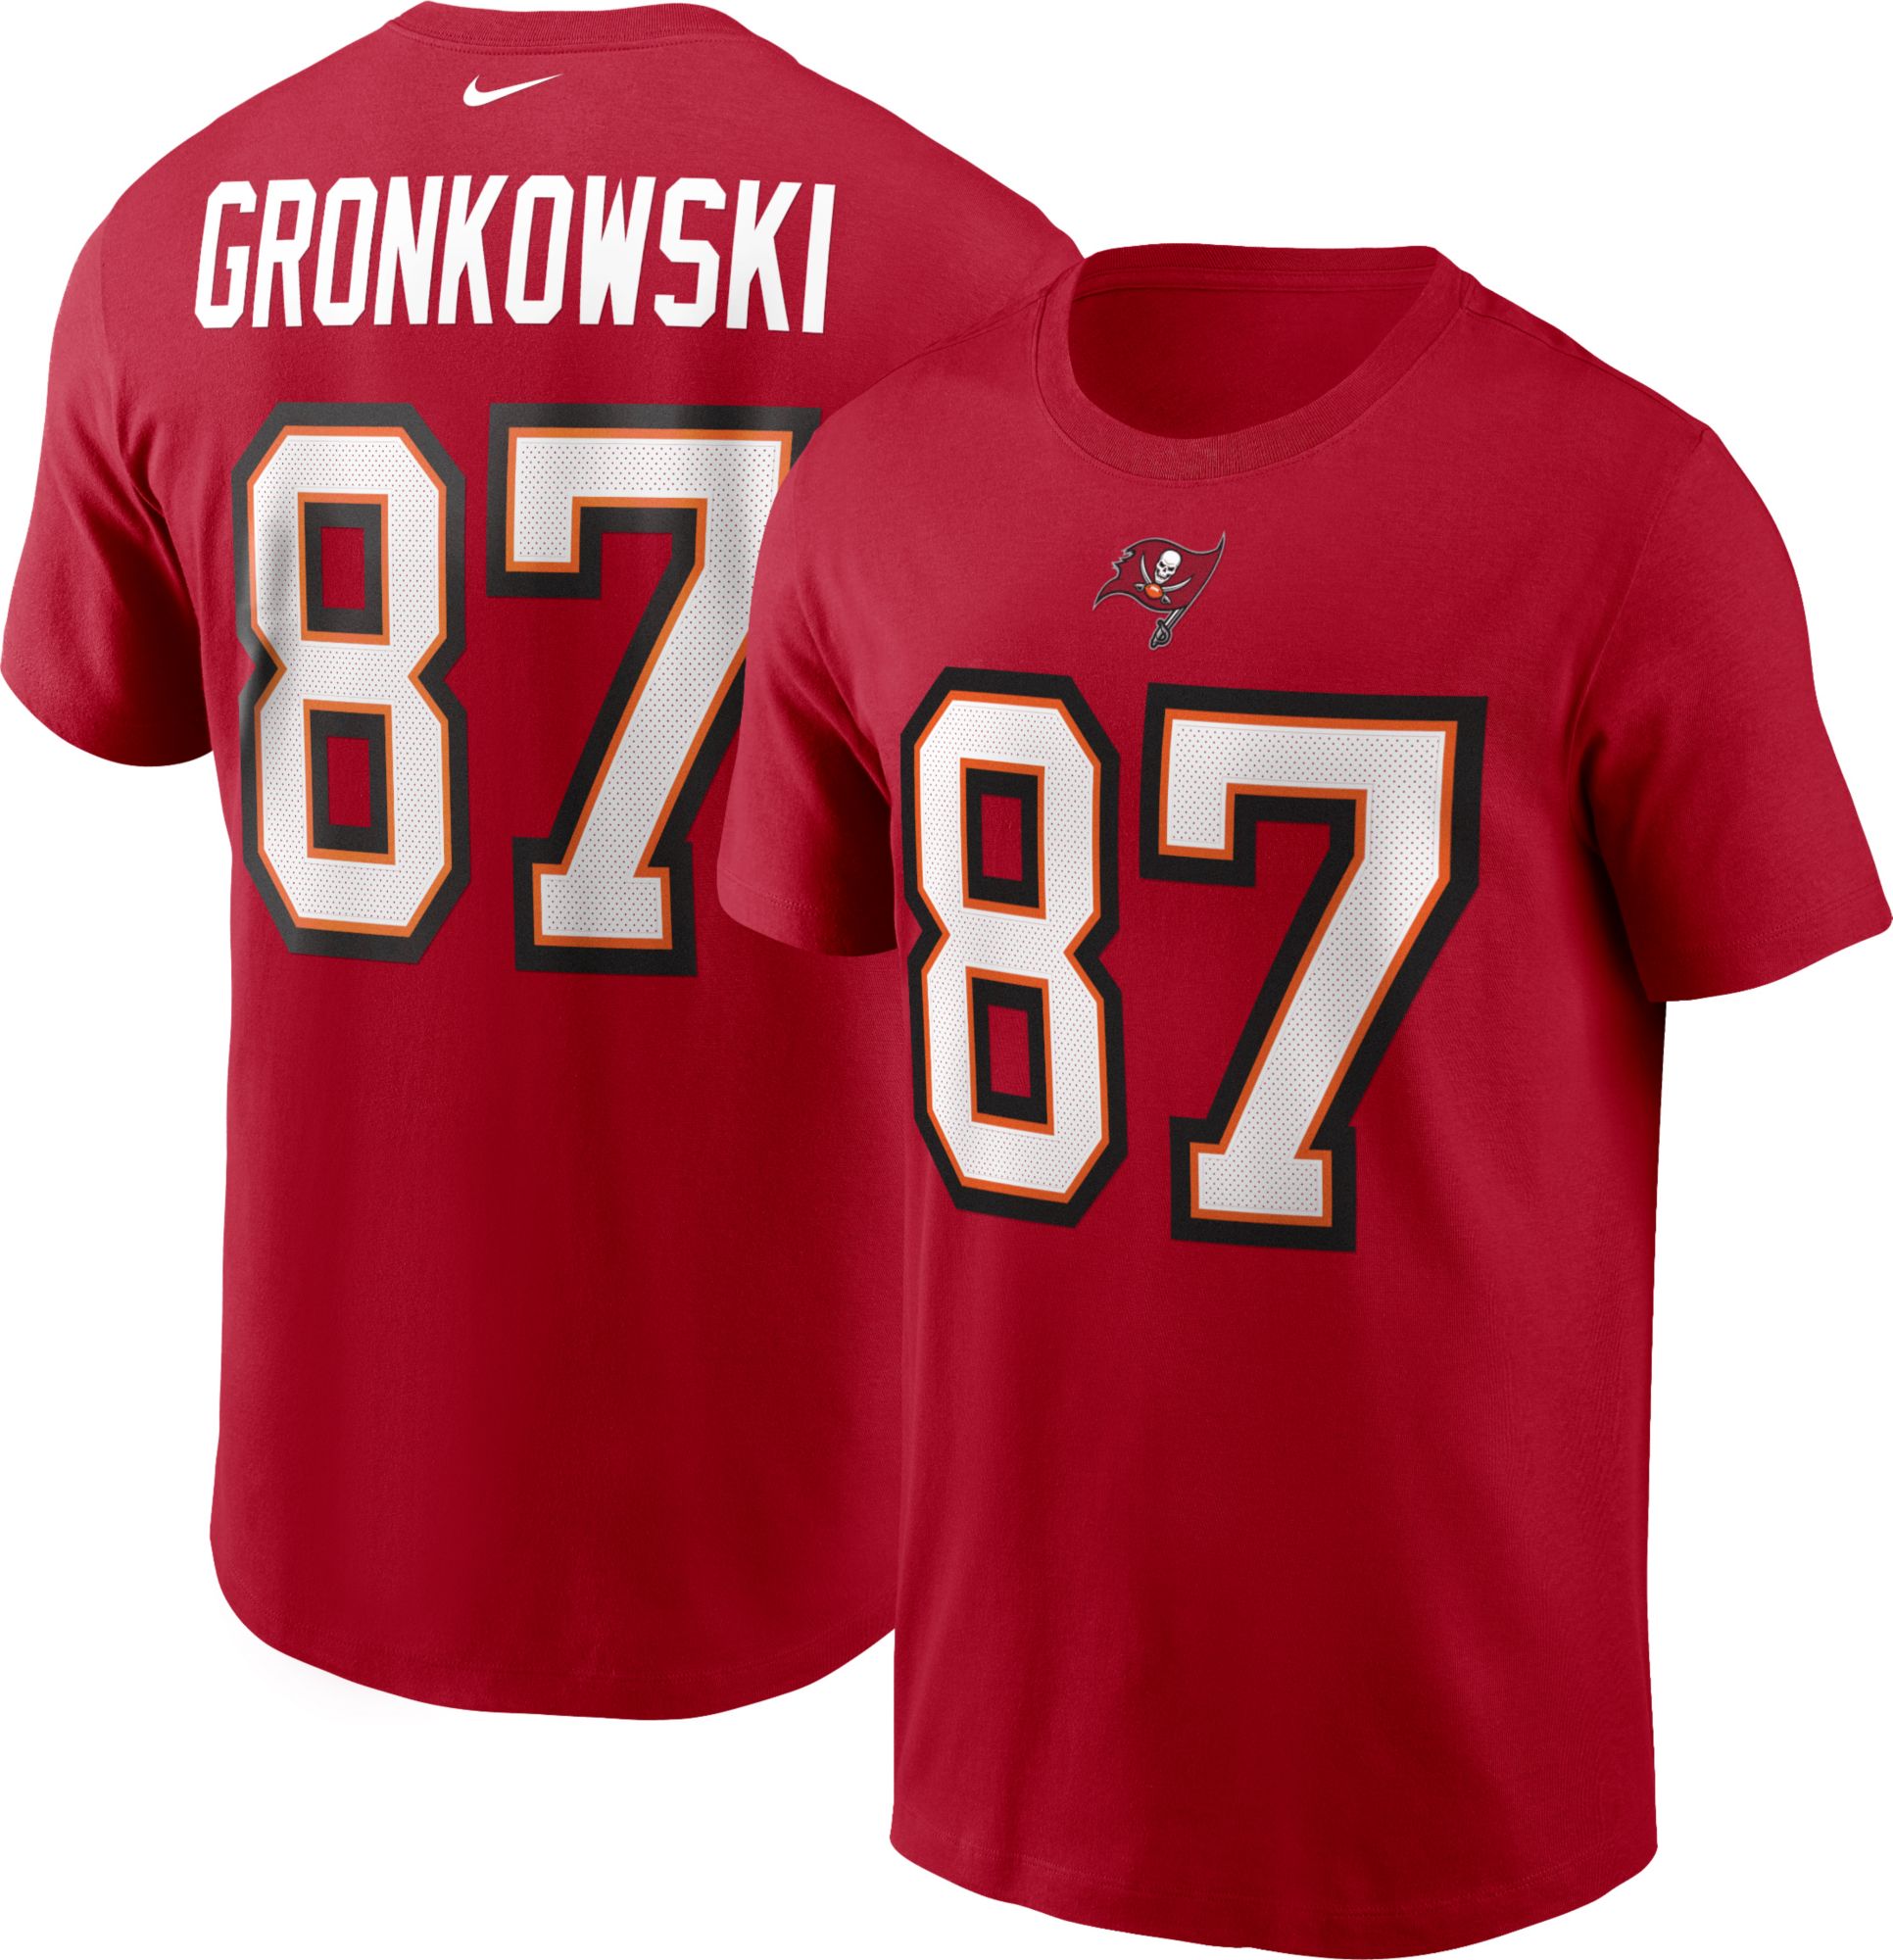 gronkowski shirt